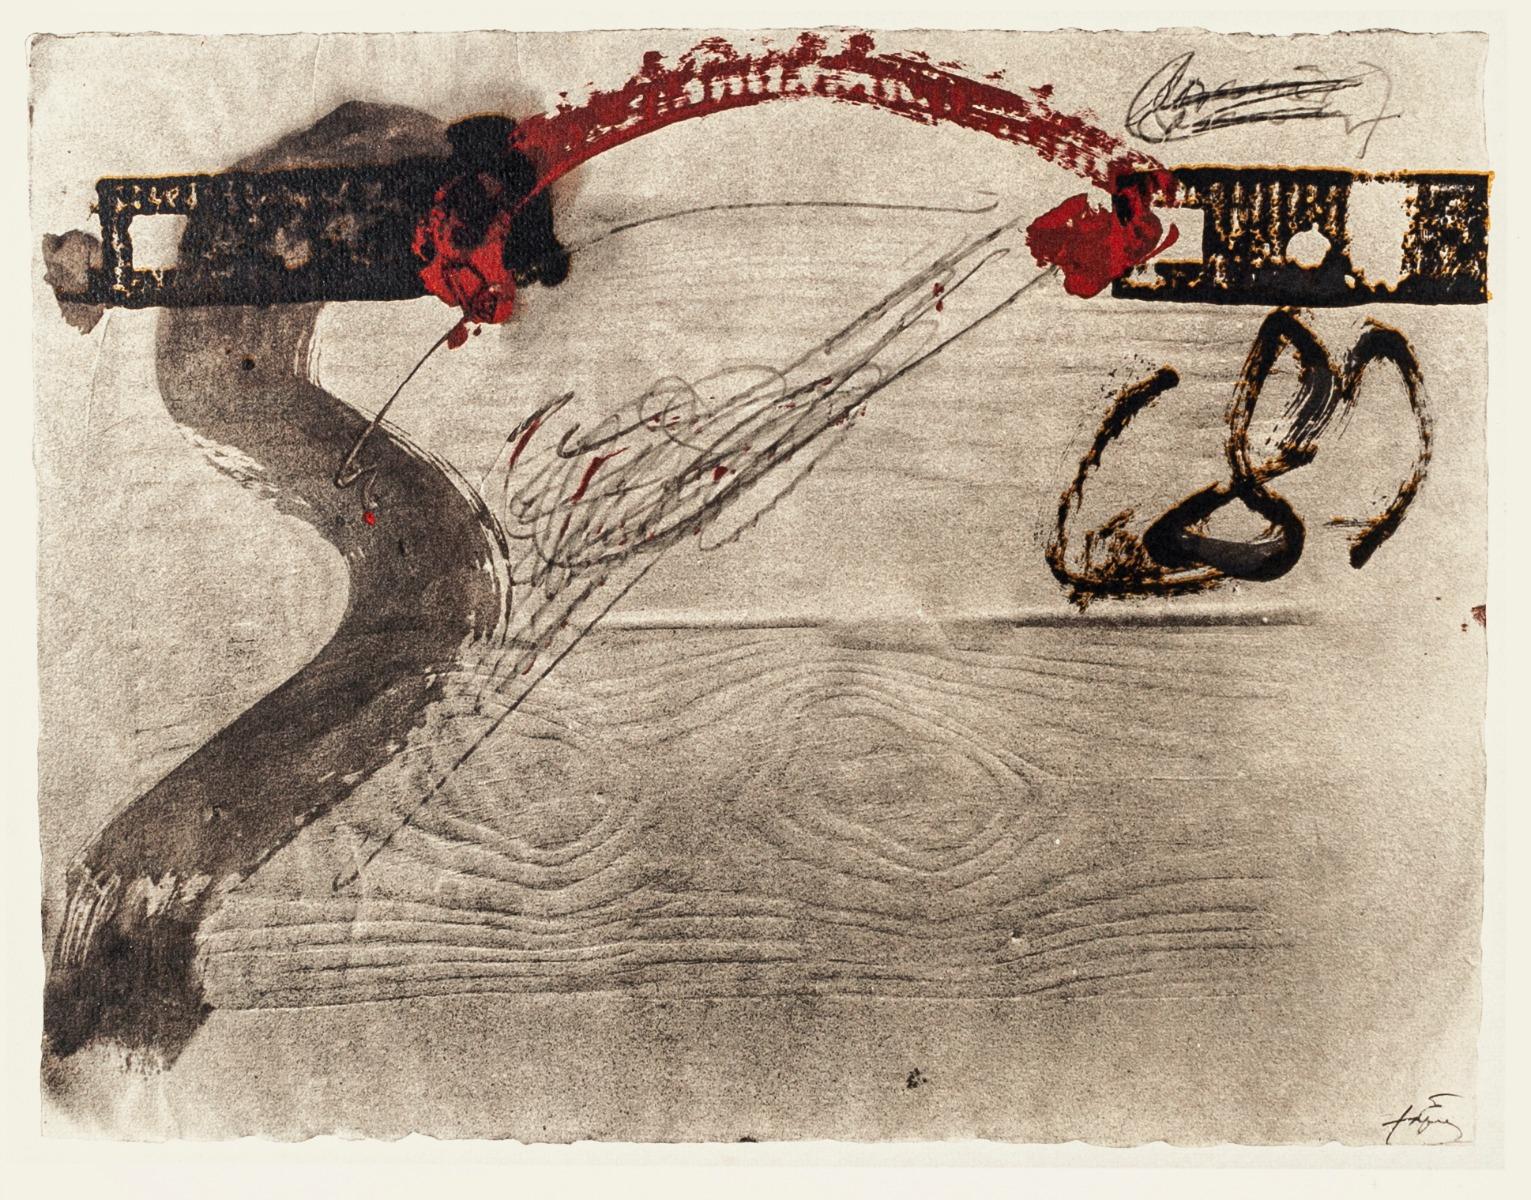 Antoni Tàpies (after) Abstract Print - Impression of Wood - Vintage Offset Print After Antoni Tàpies - 1982